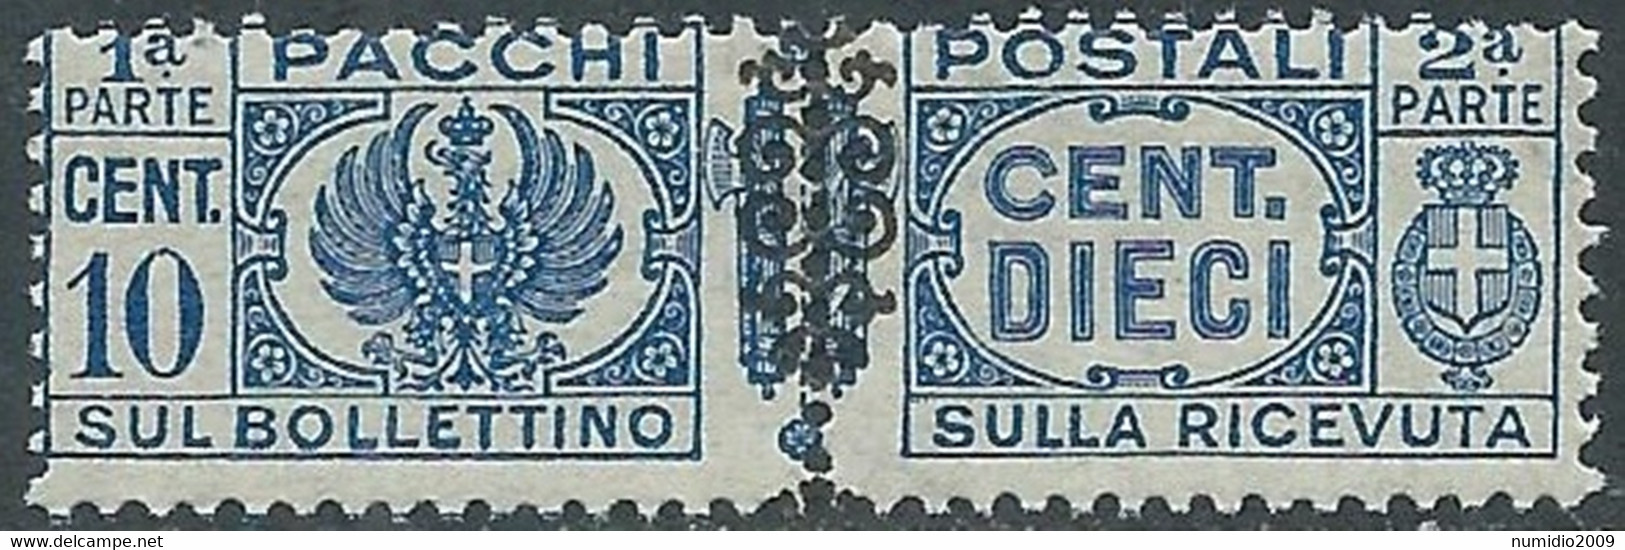 1945 LUOGOTENENZA PACCHI POSTALI 10 CENT MNH ** - CZ19-5 - Postal Parcels